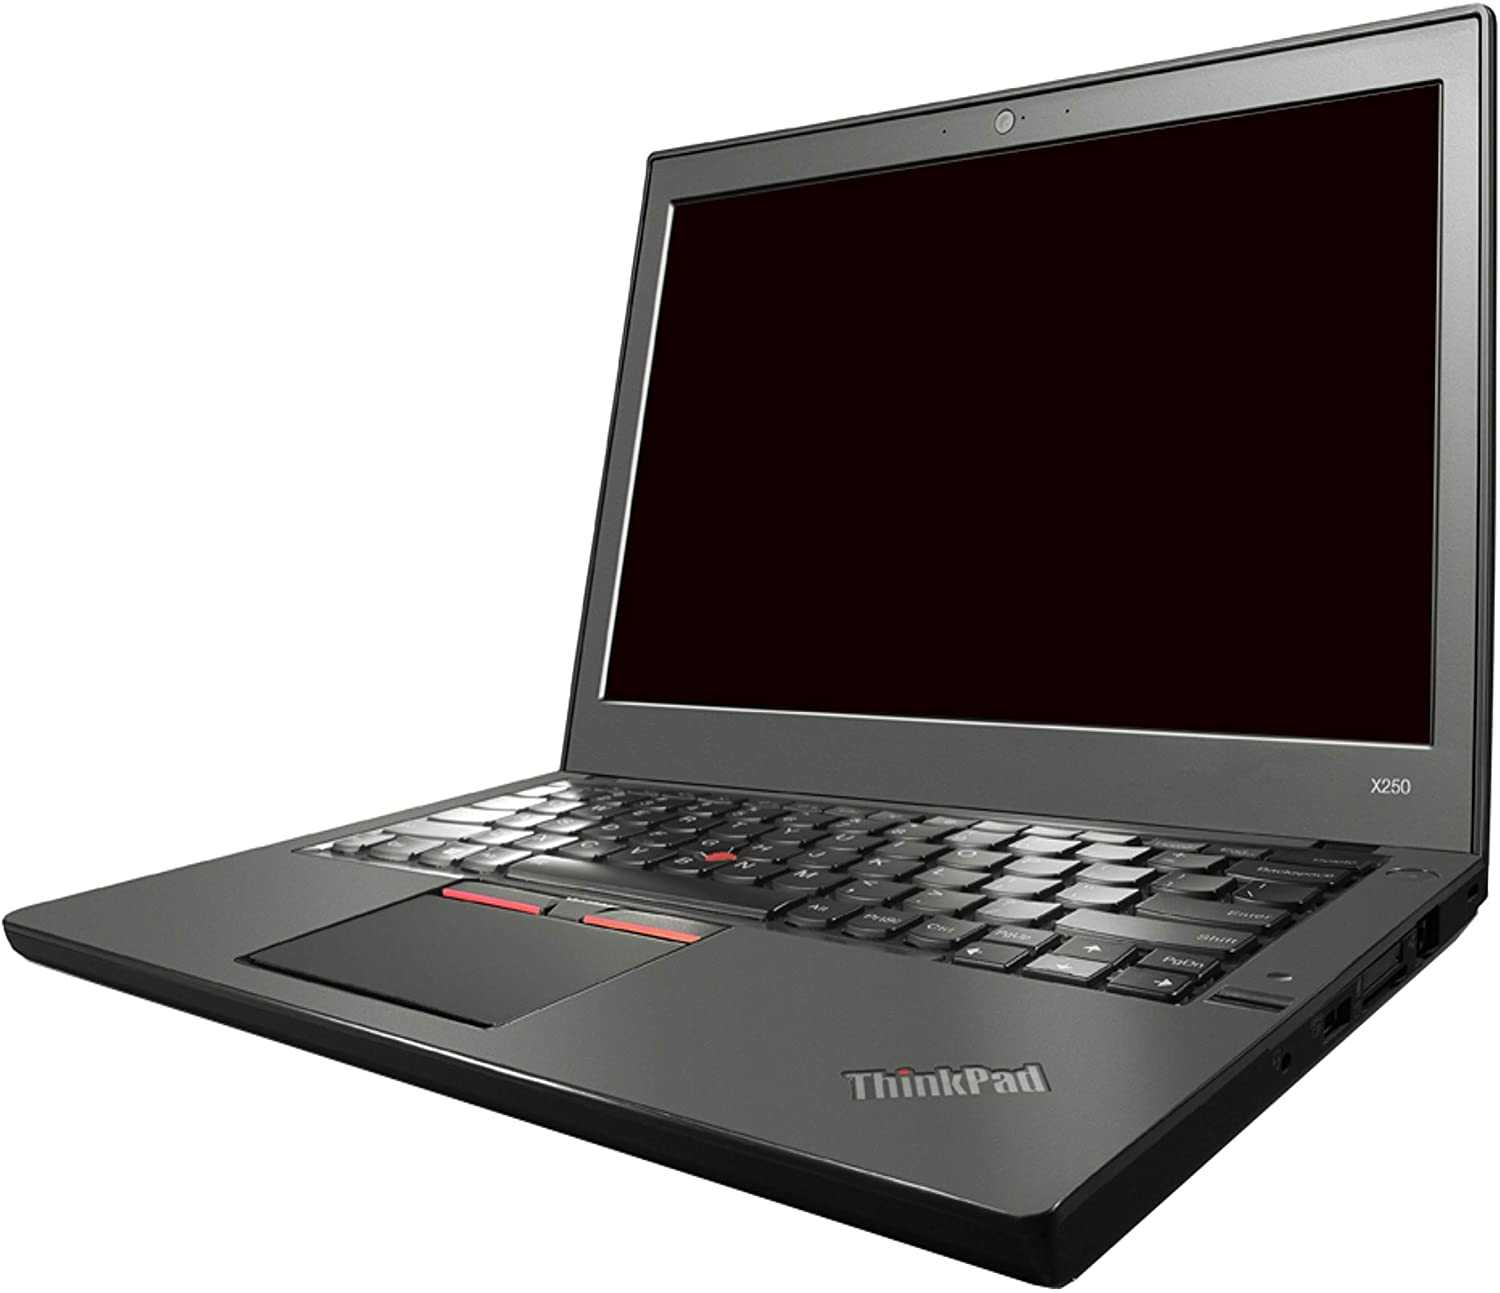 Lenovo ThinkPad X250 Intel Core i5 - 5th Generation 12.5" Display 8GB RAM 240GB HDD 0